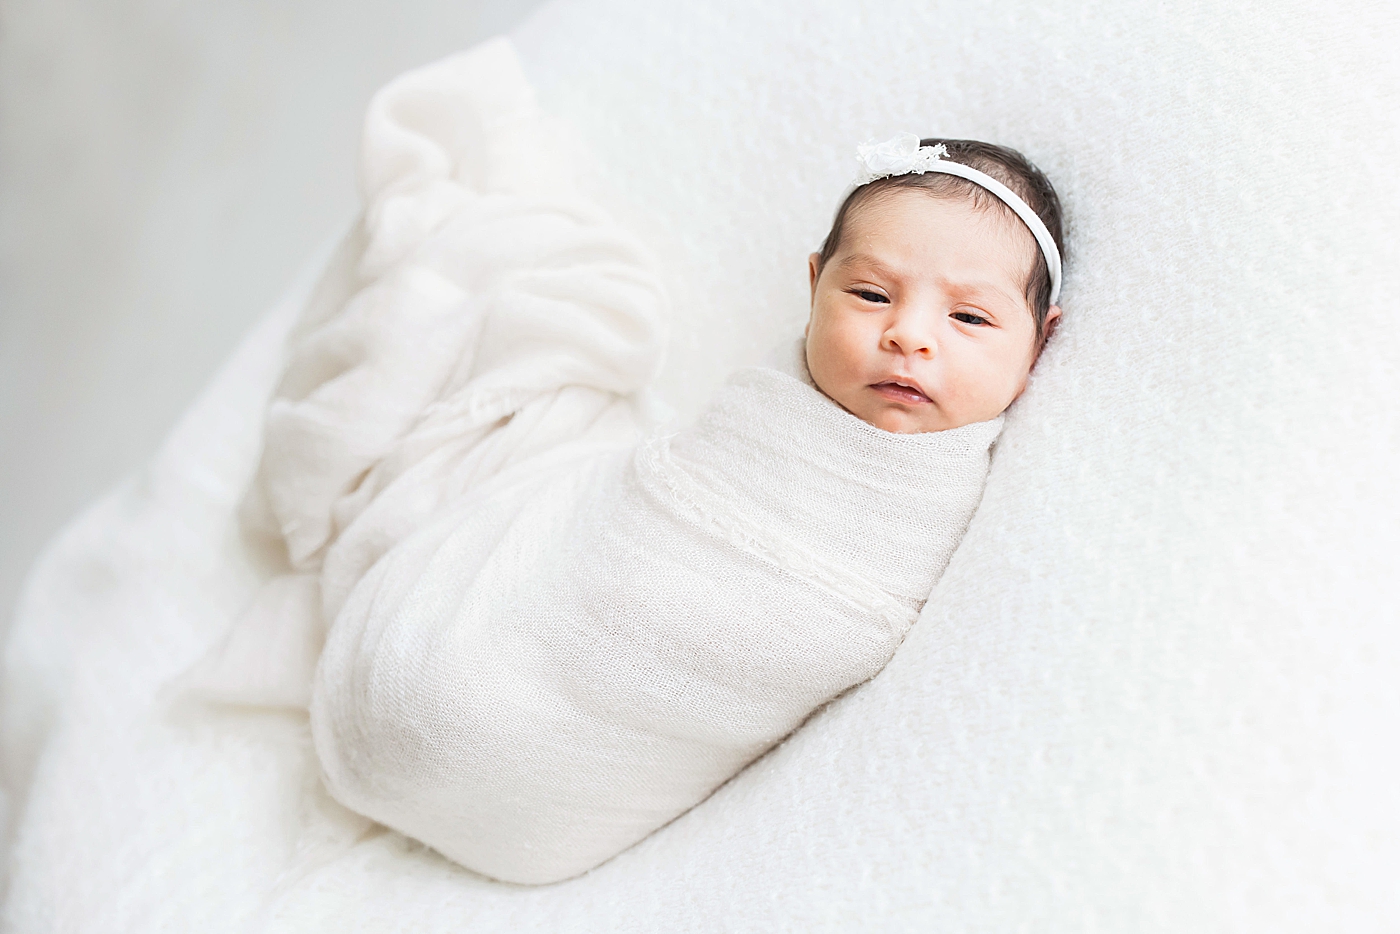 Baby awake during newborn photos. Photo by Fresh Light Photography.